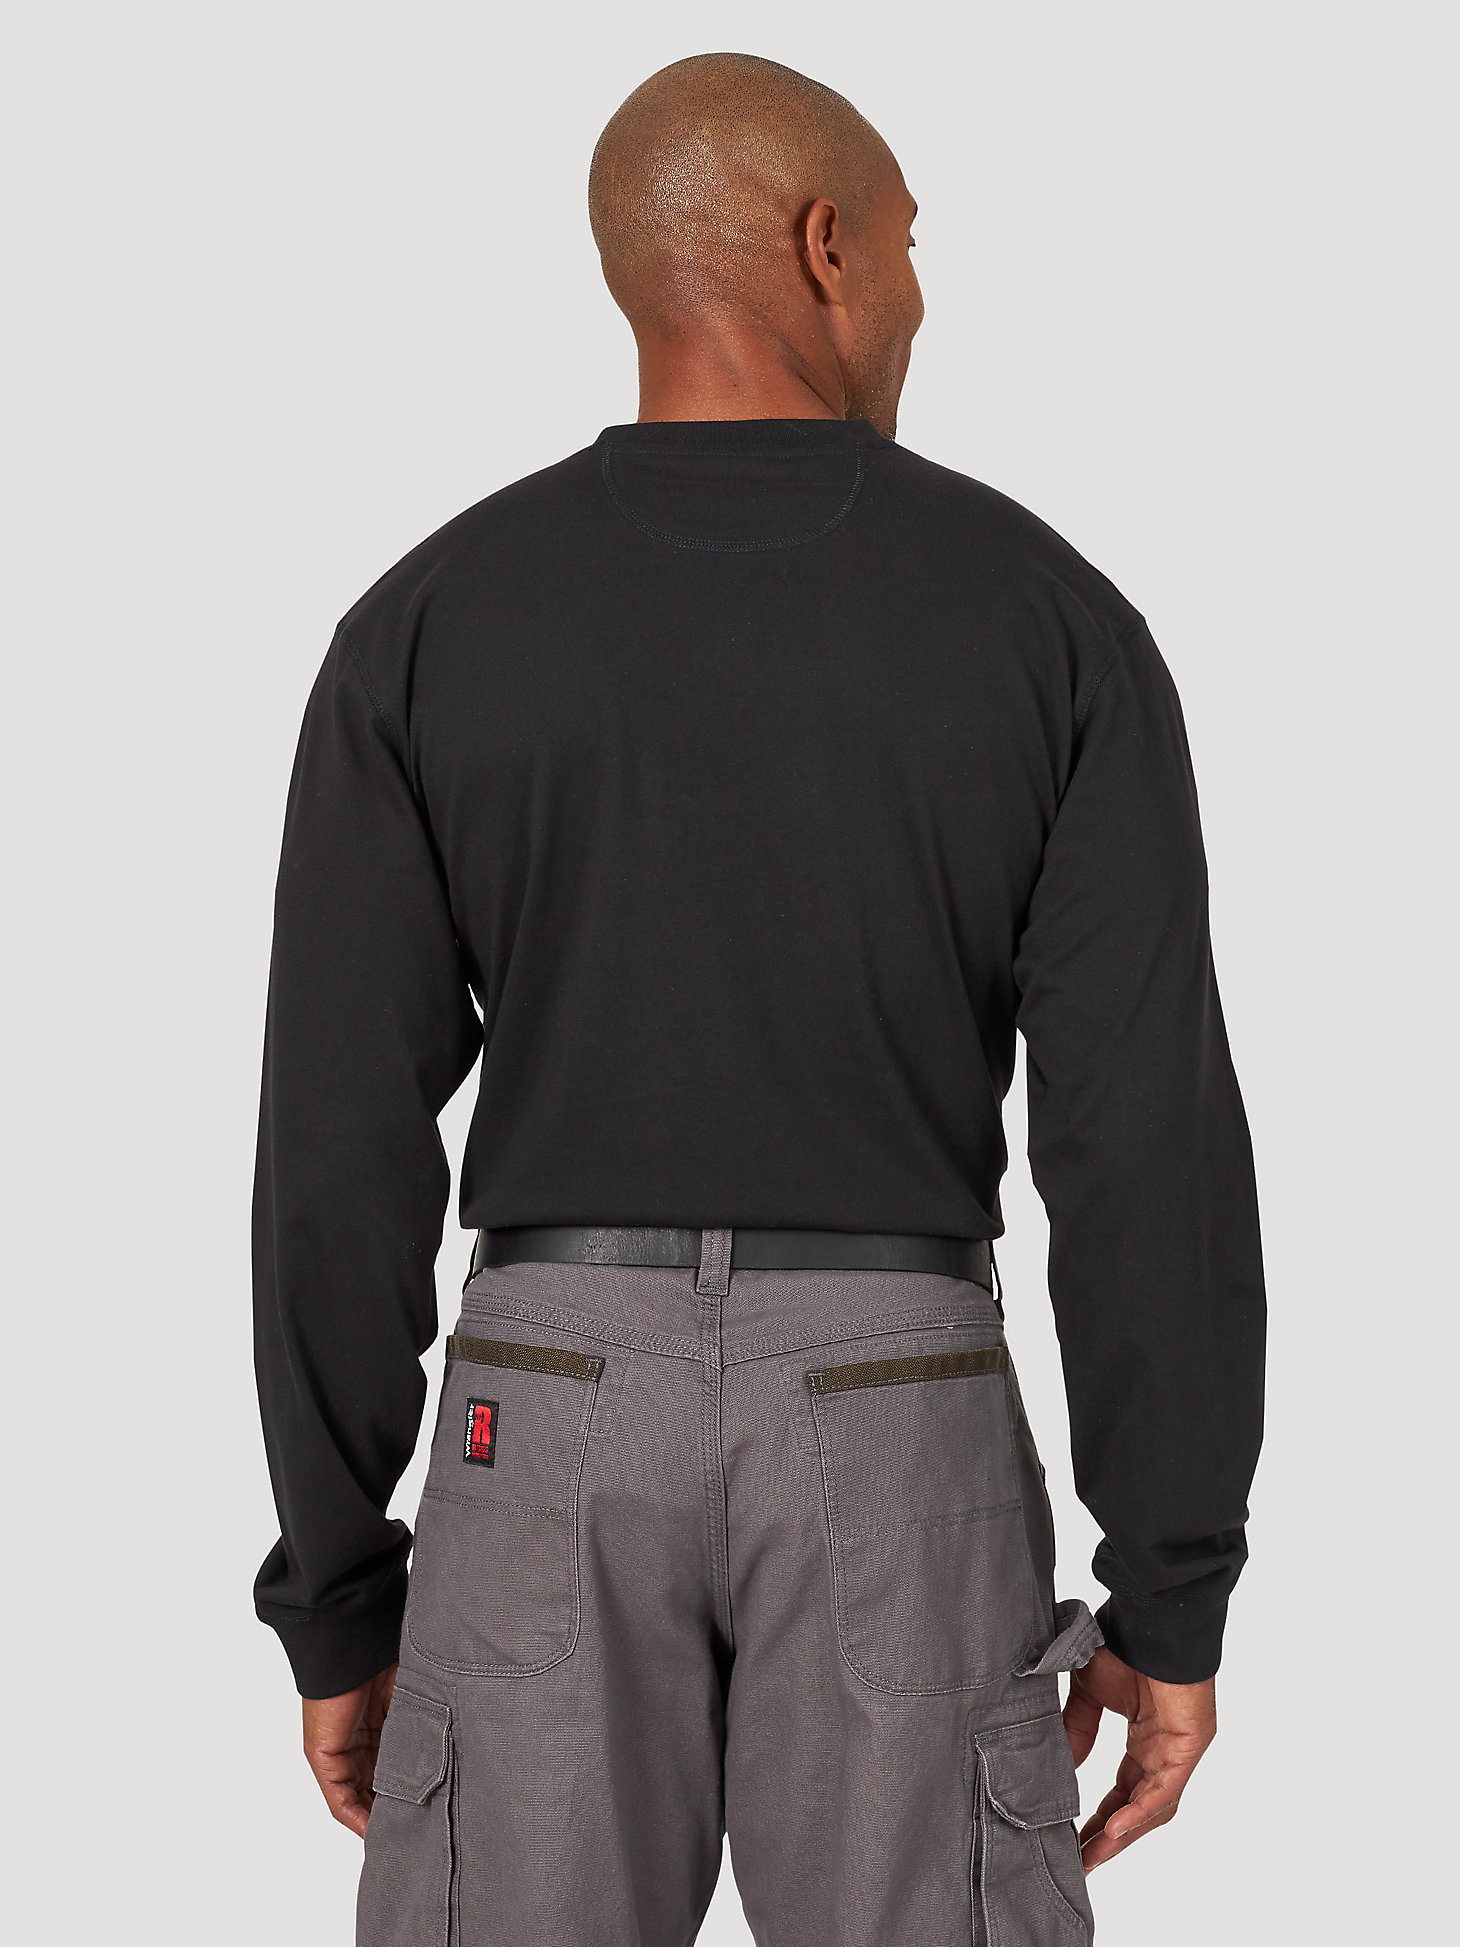 Wrangler® RIGGS Workwear® Long Sleeve 1 Pocket Performance T-Shirt in Black alternative view 1